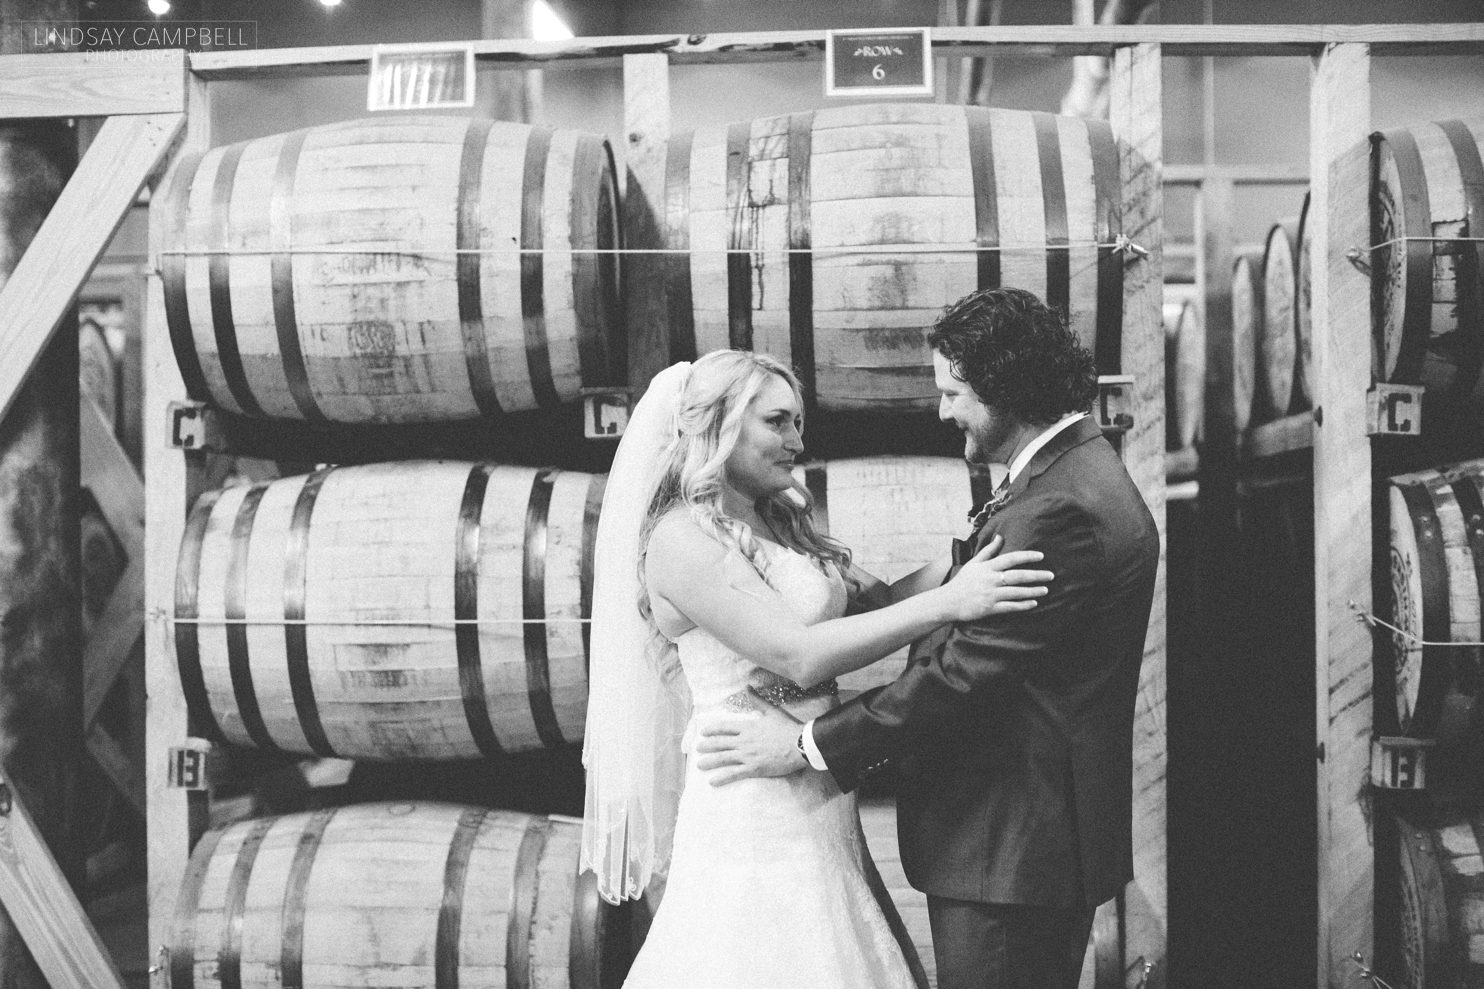 Lauren-and-Jason-Nelsons-Greenbrier-Distillery-Wedding-Photos_0012 Lauren + Jason's Industrial-Chic Nashville Distillery Wedding